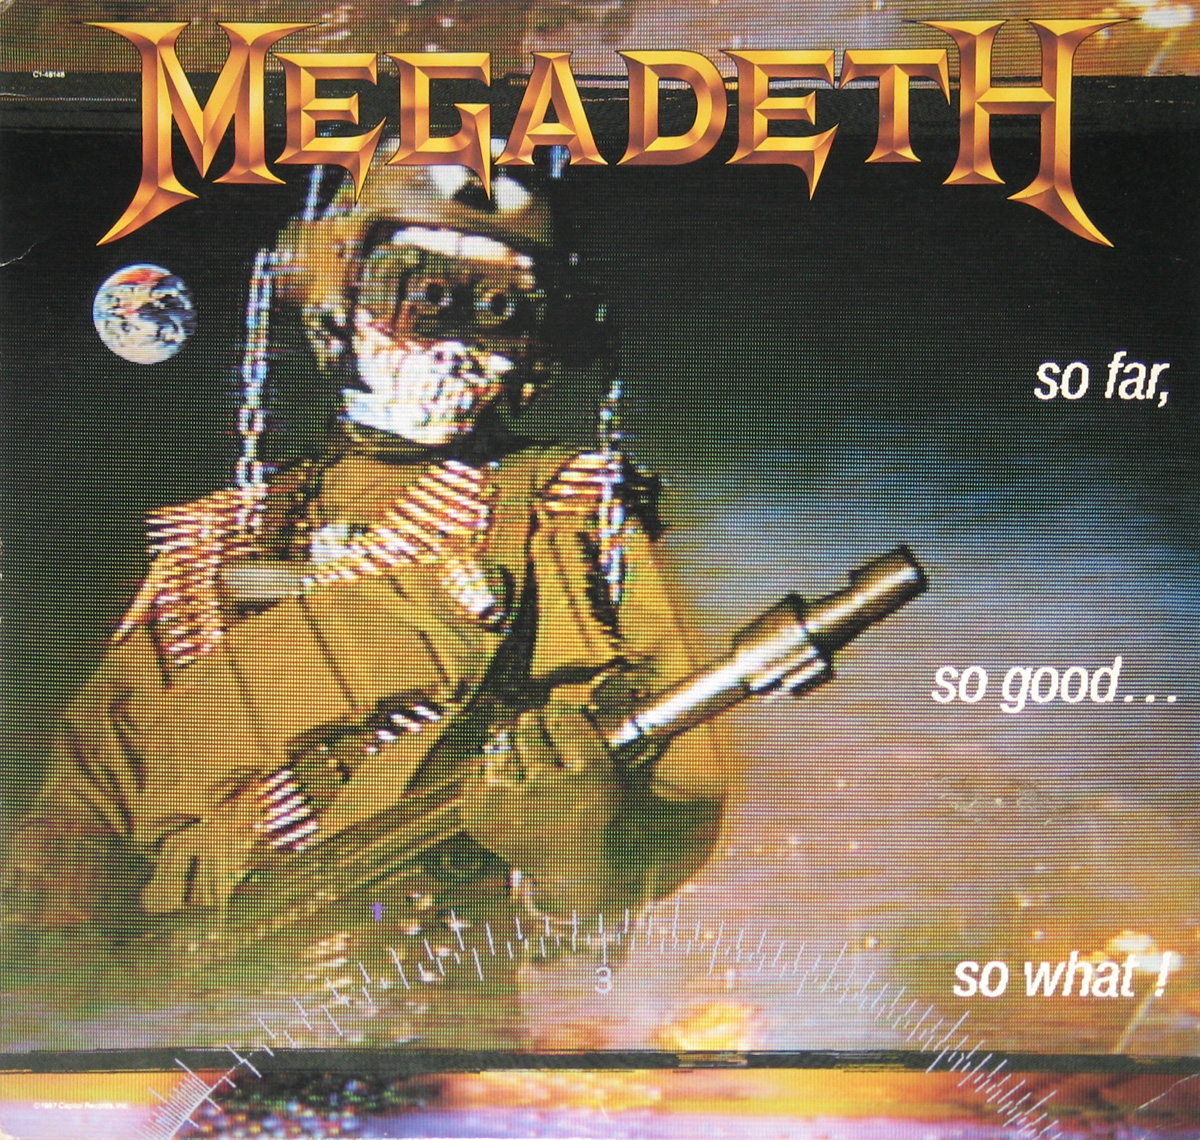 High Resolution Photo Megadeth So Far So Good So What ( USA Release ) Vinyl Record